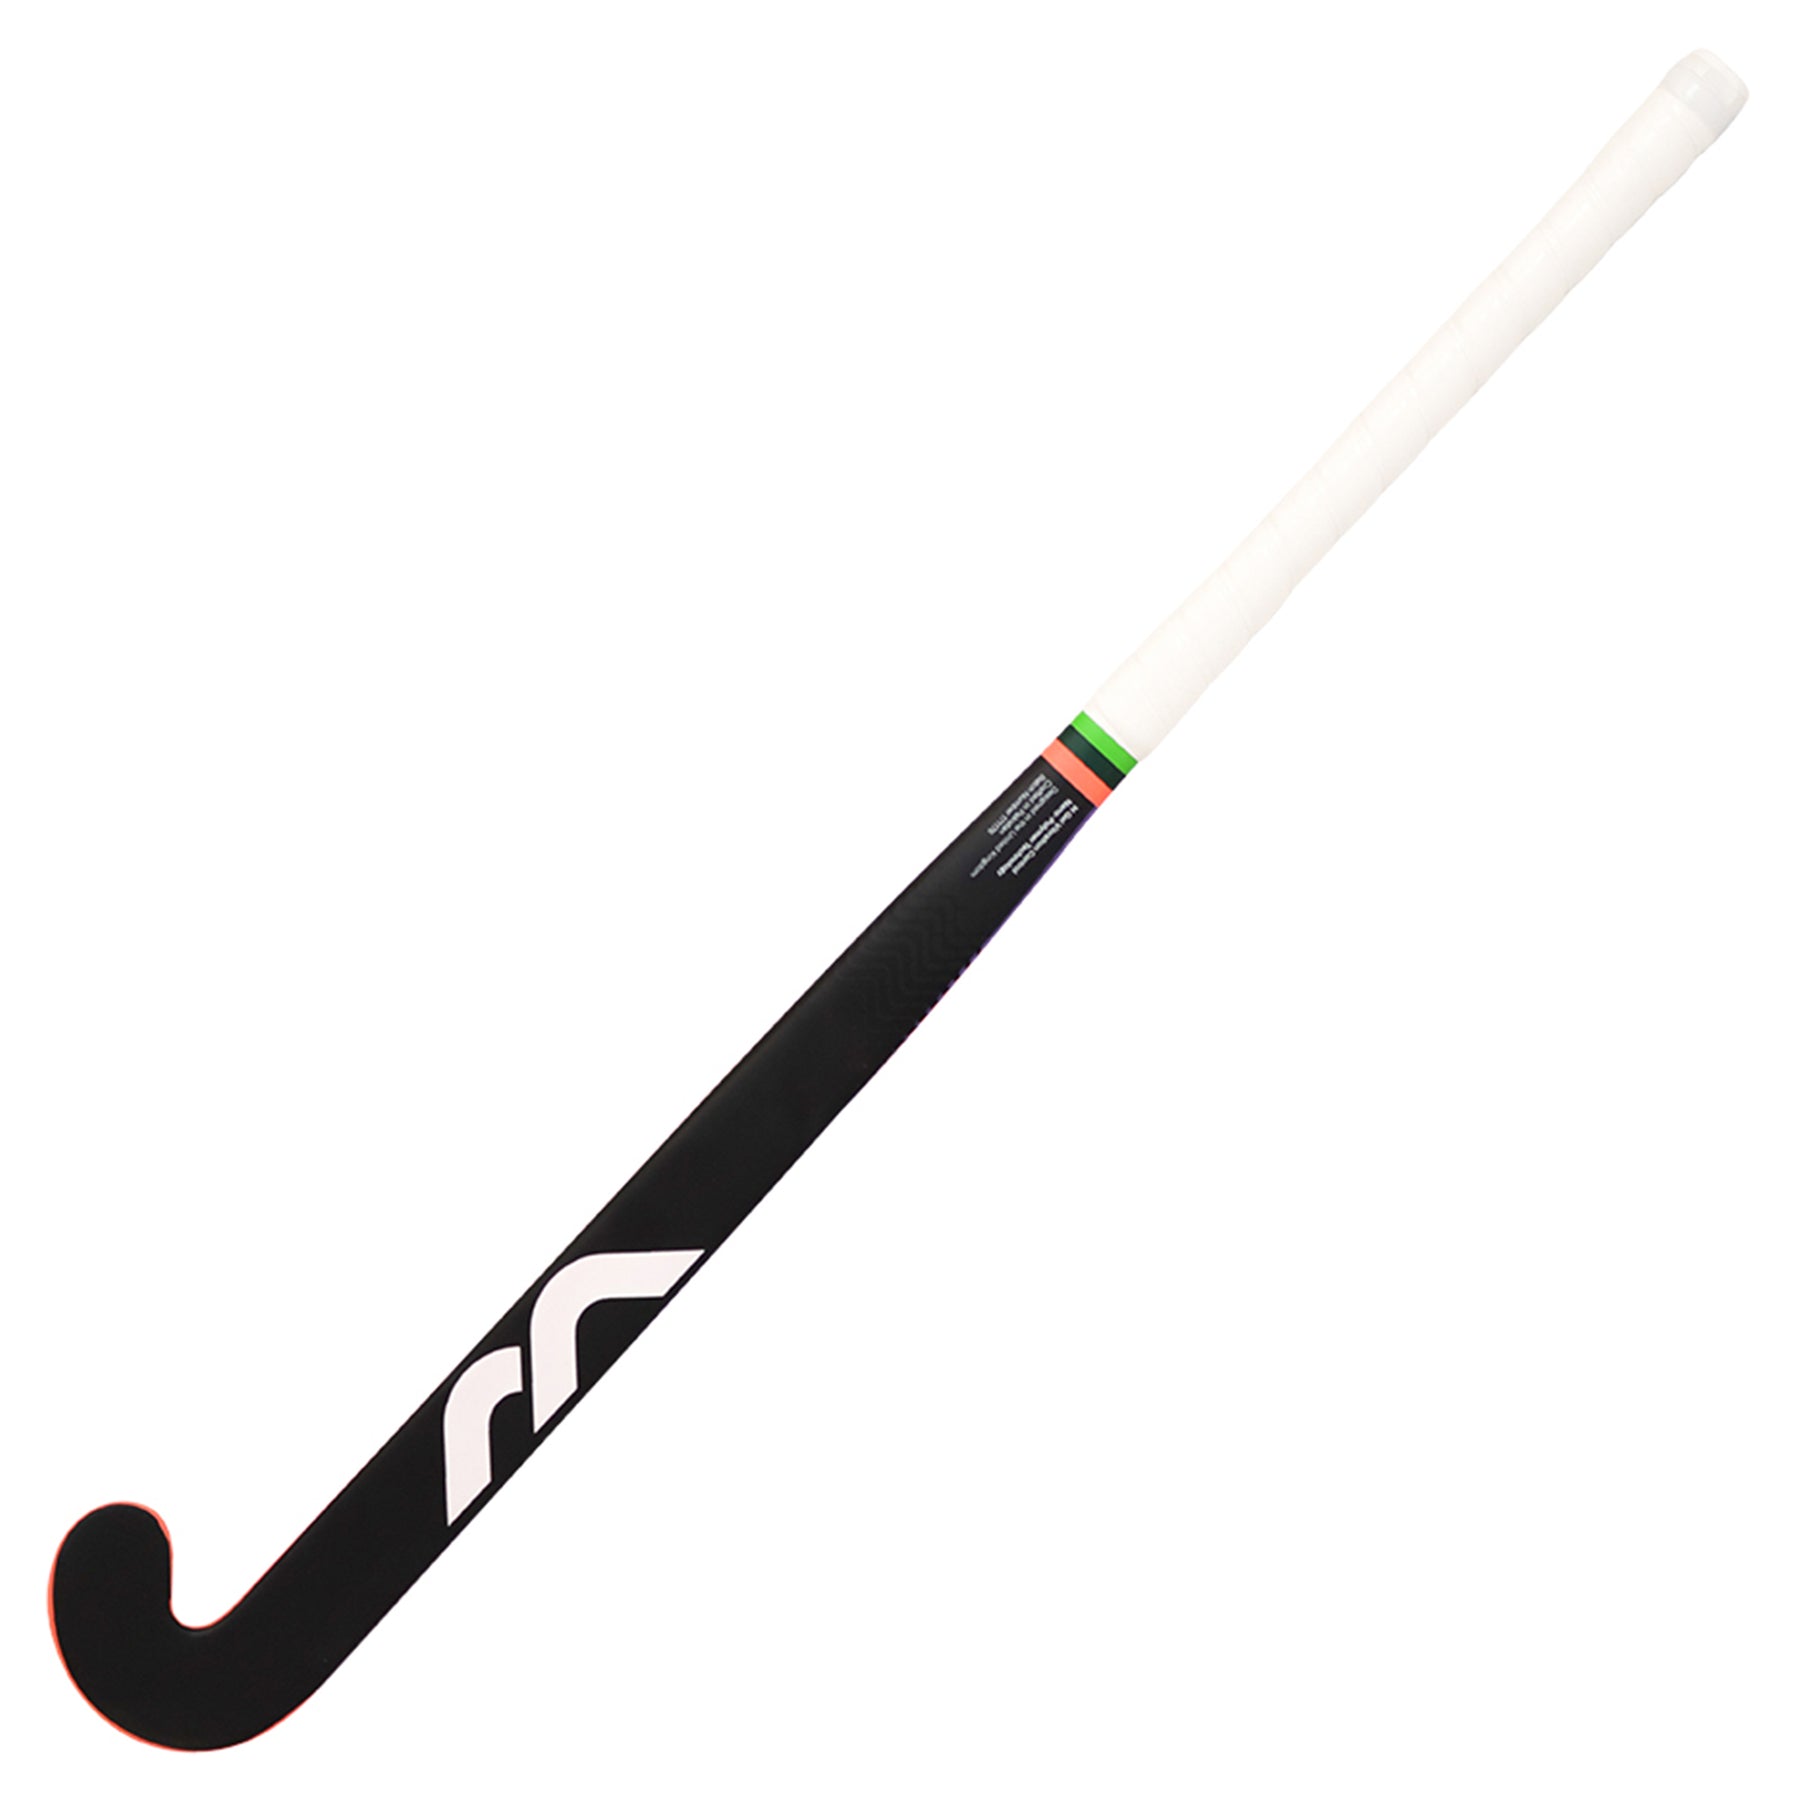 Mercian Genesis CF5 Hockey Stick: Black/Coral/Purple - 36.5L